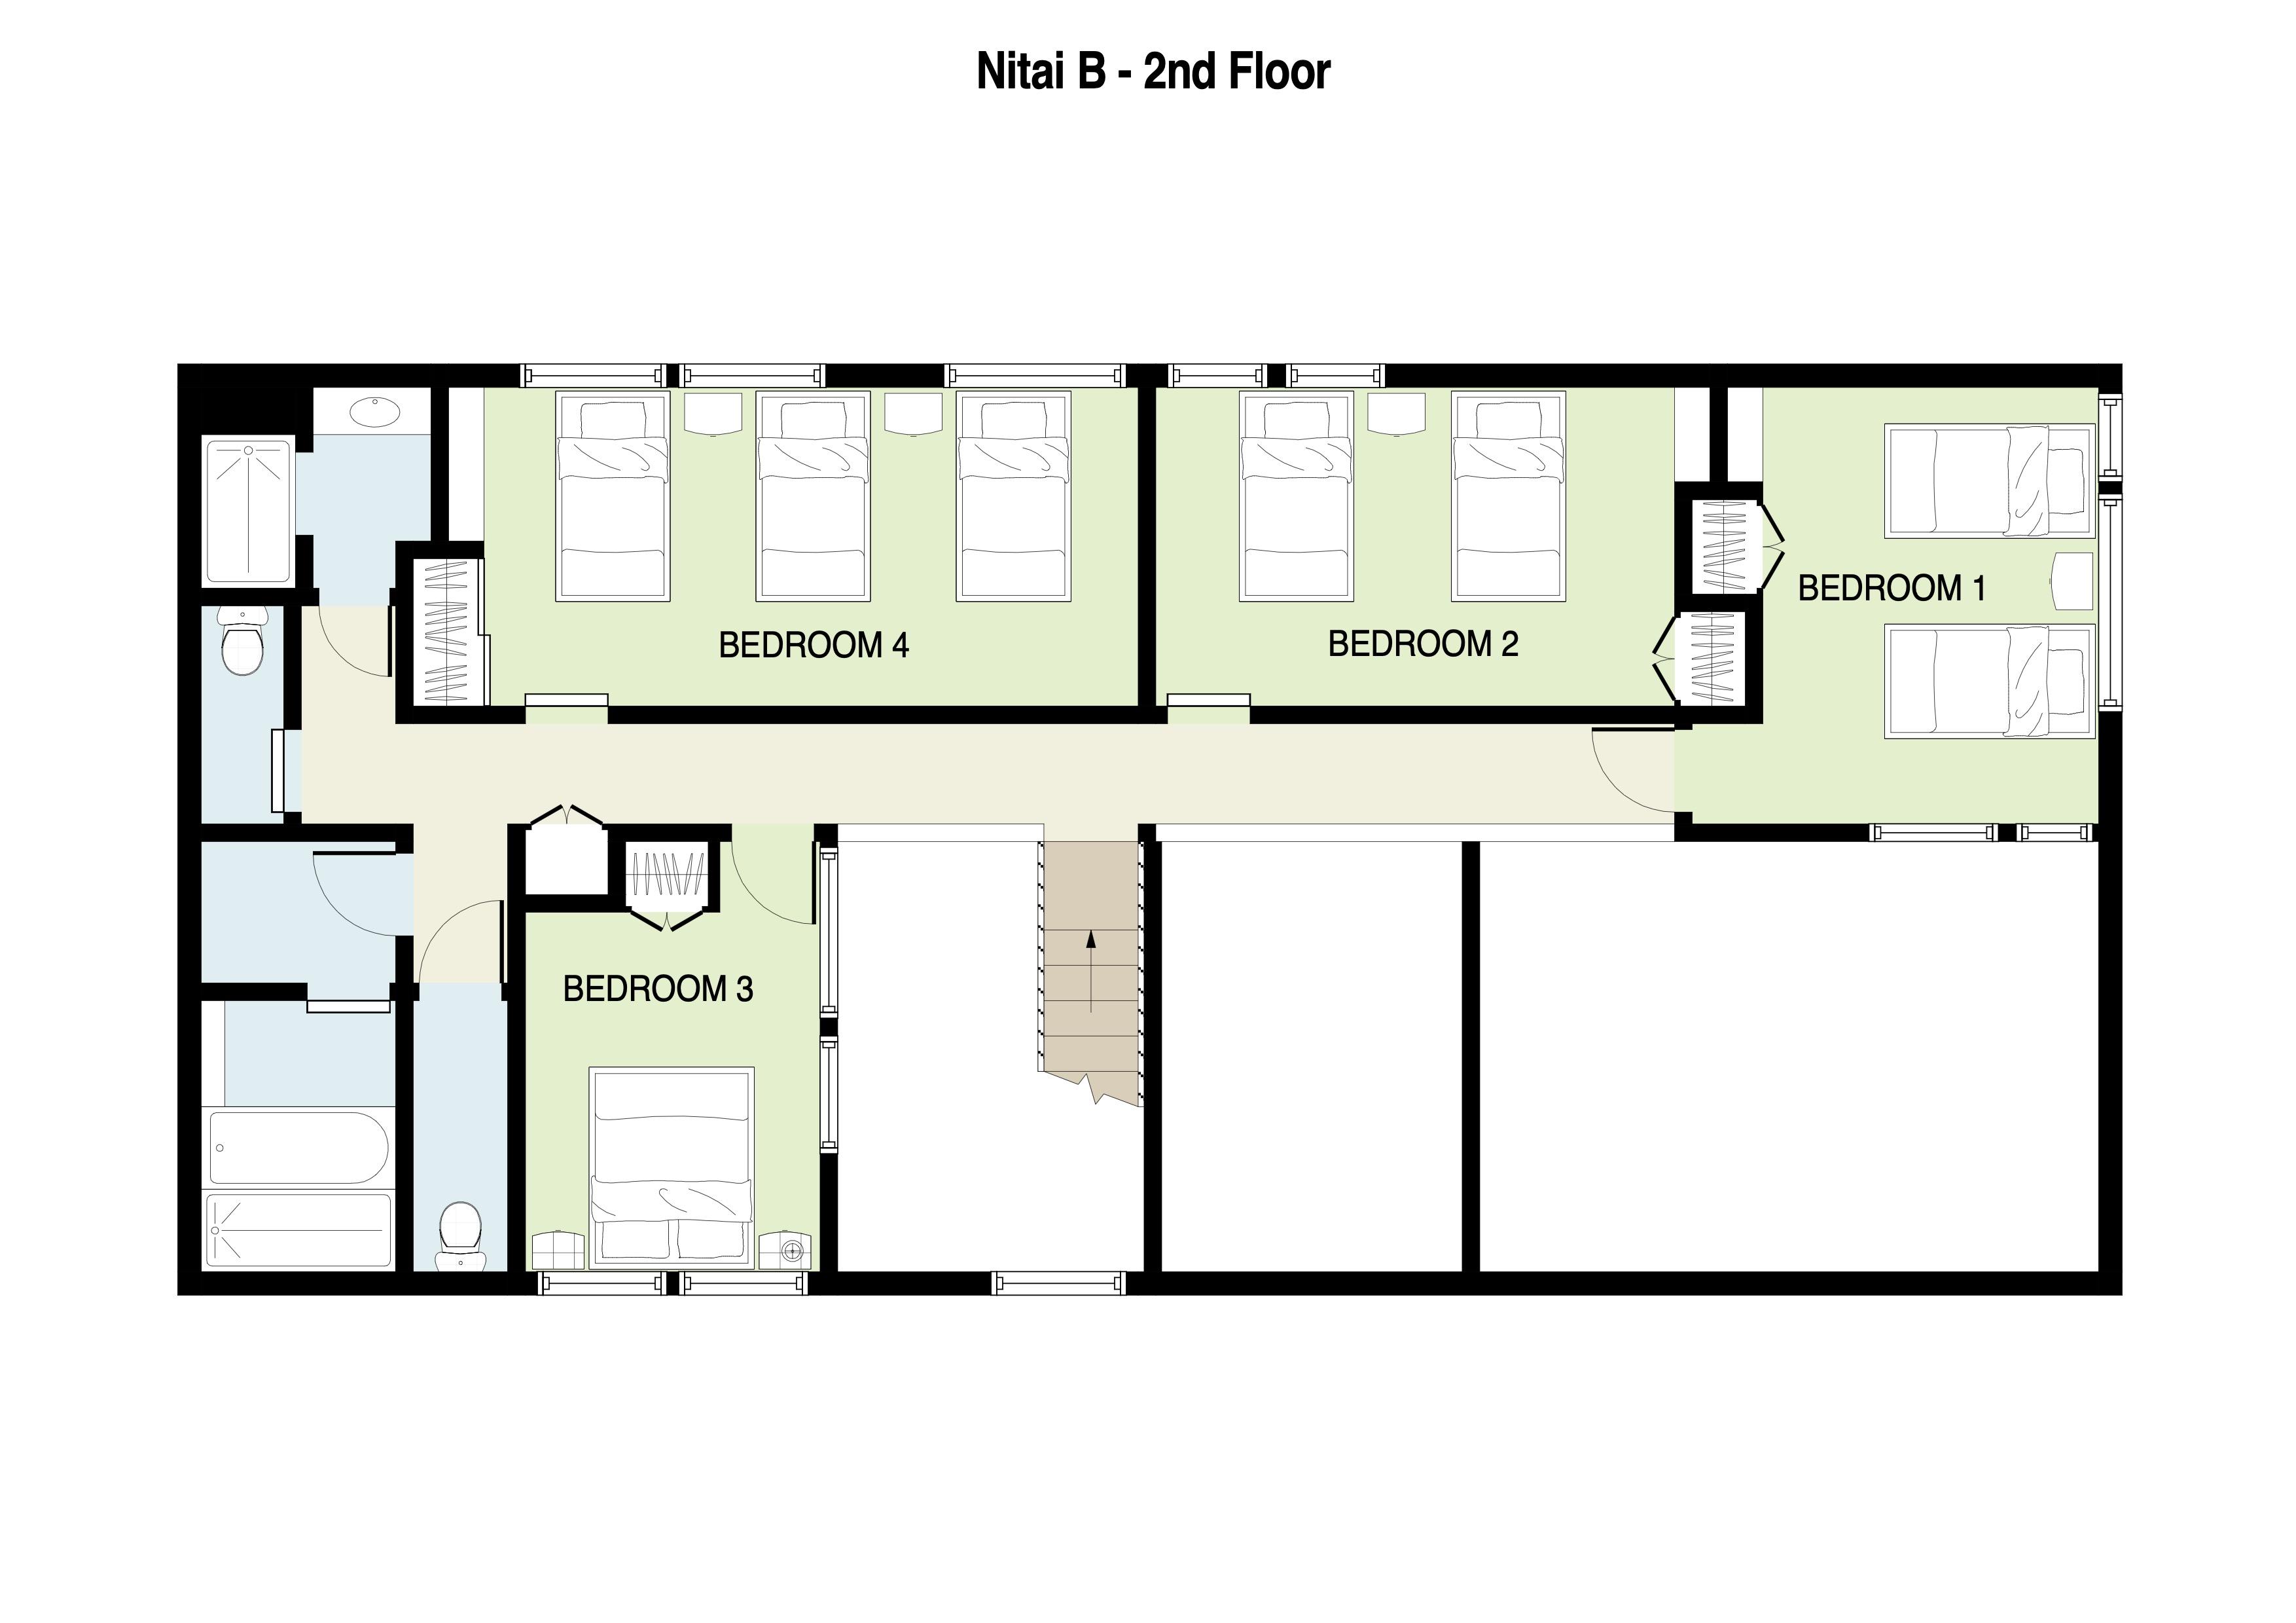 Nitai B 2nd floor plans